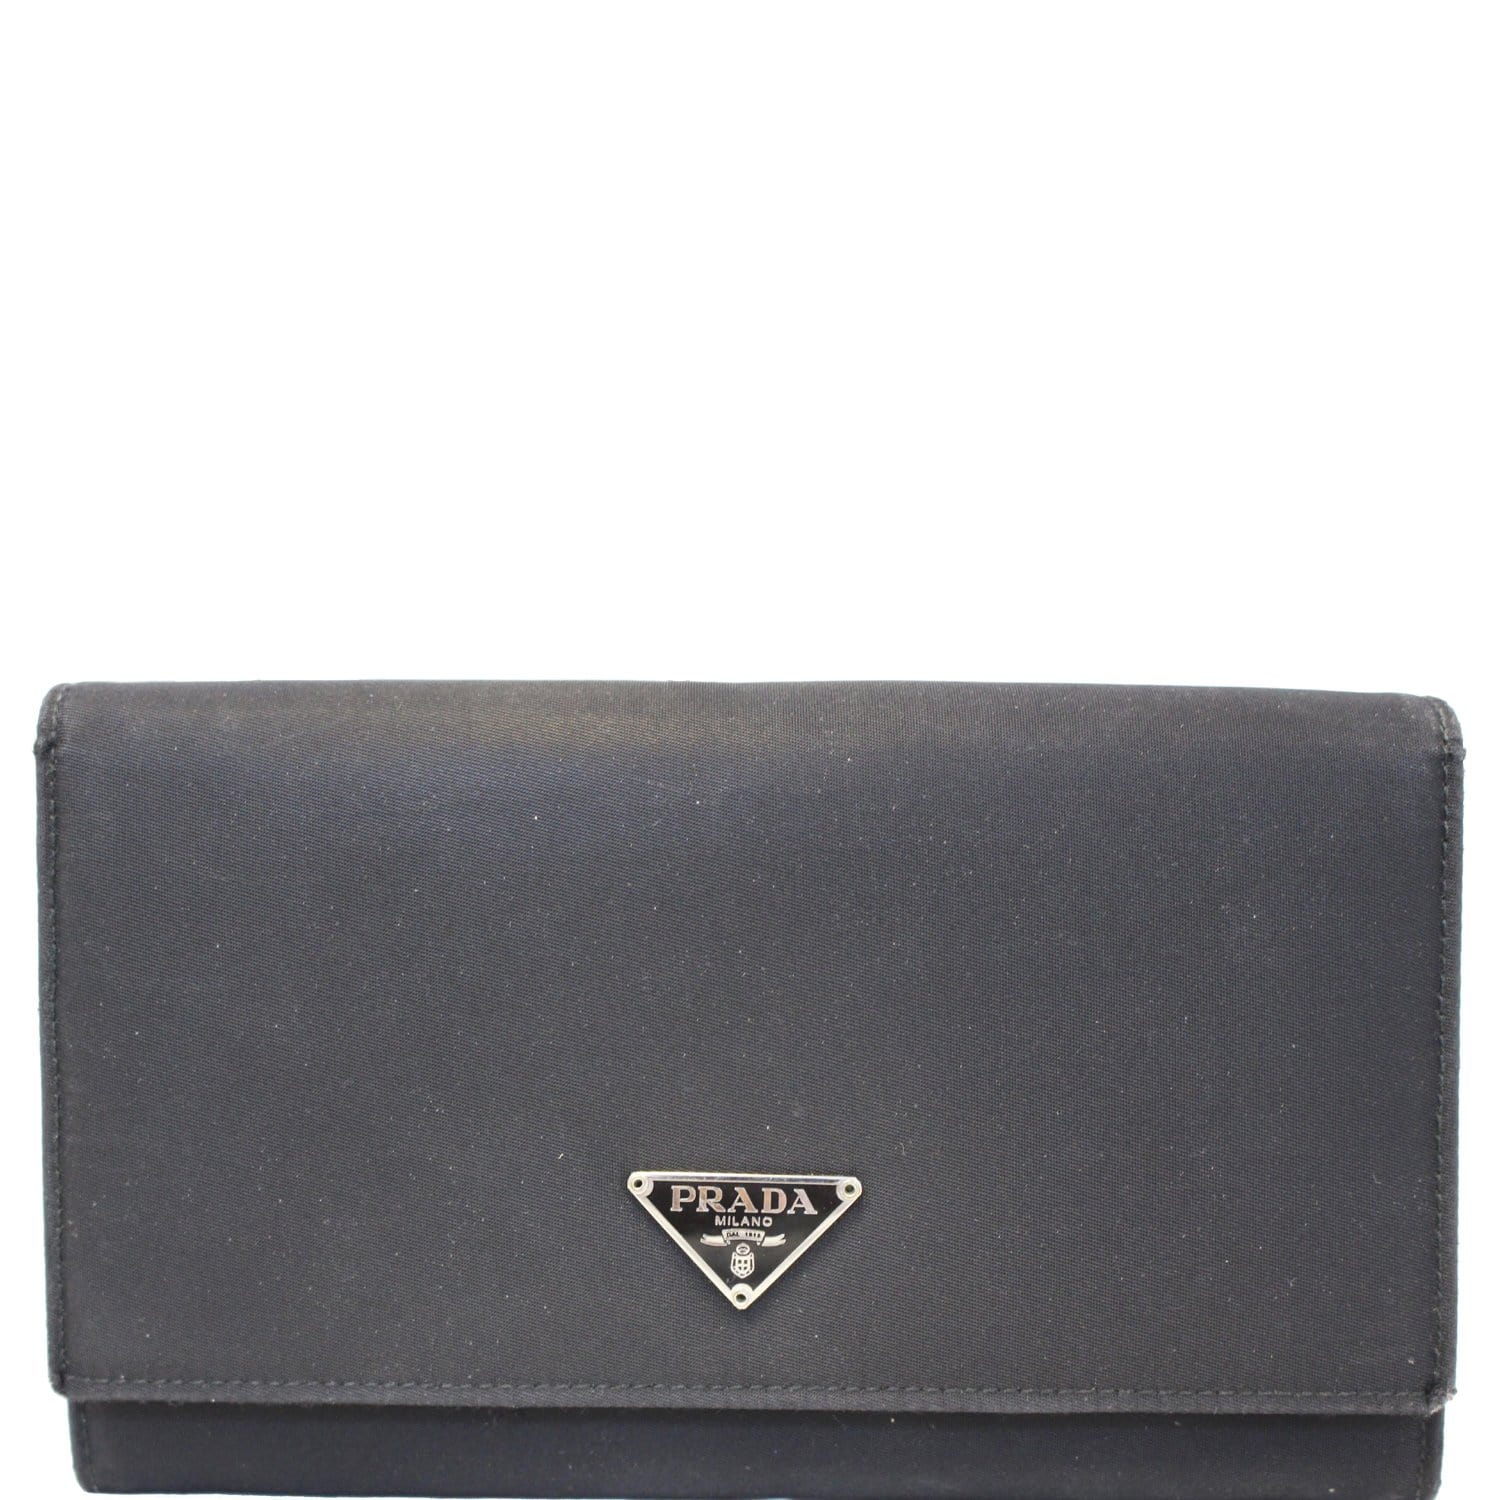 Prada Nylon Wallet - Bifold Black Wallet & Prada Purse